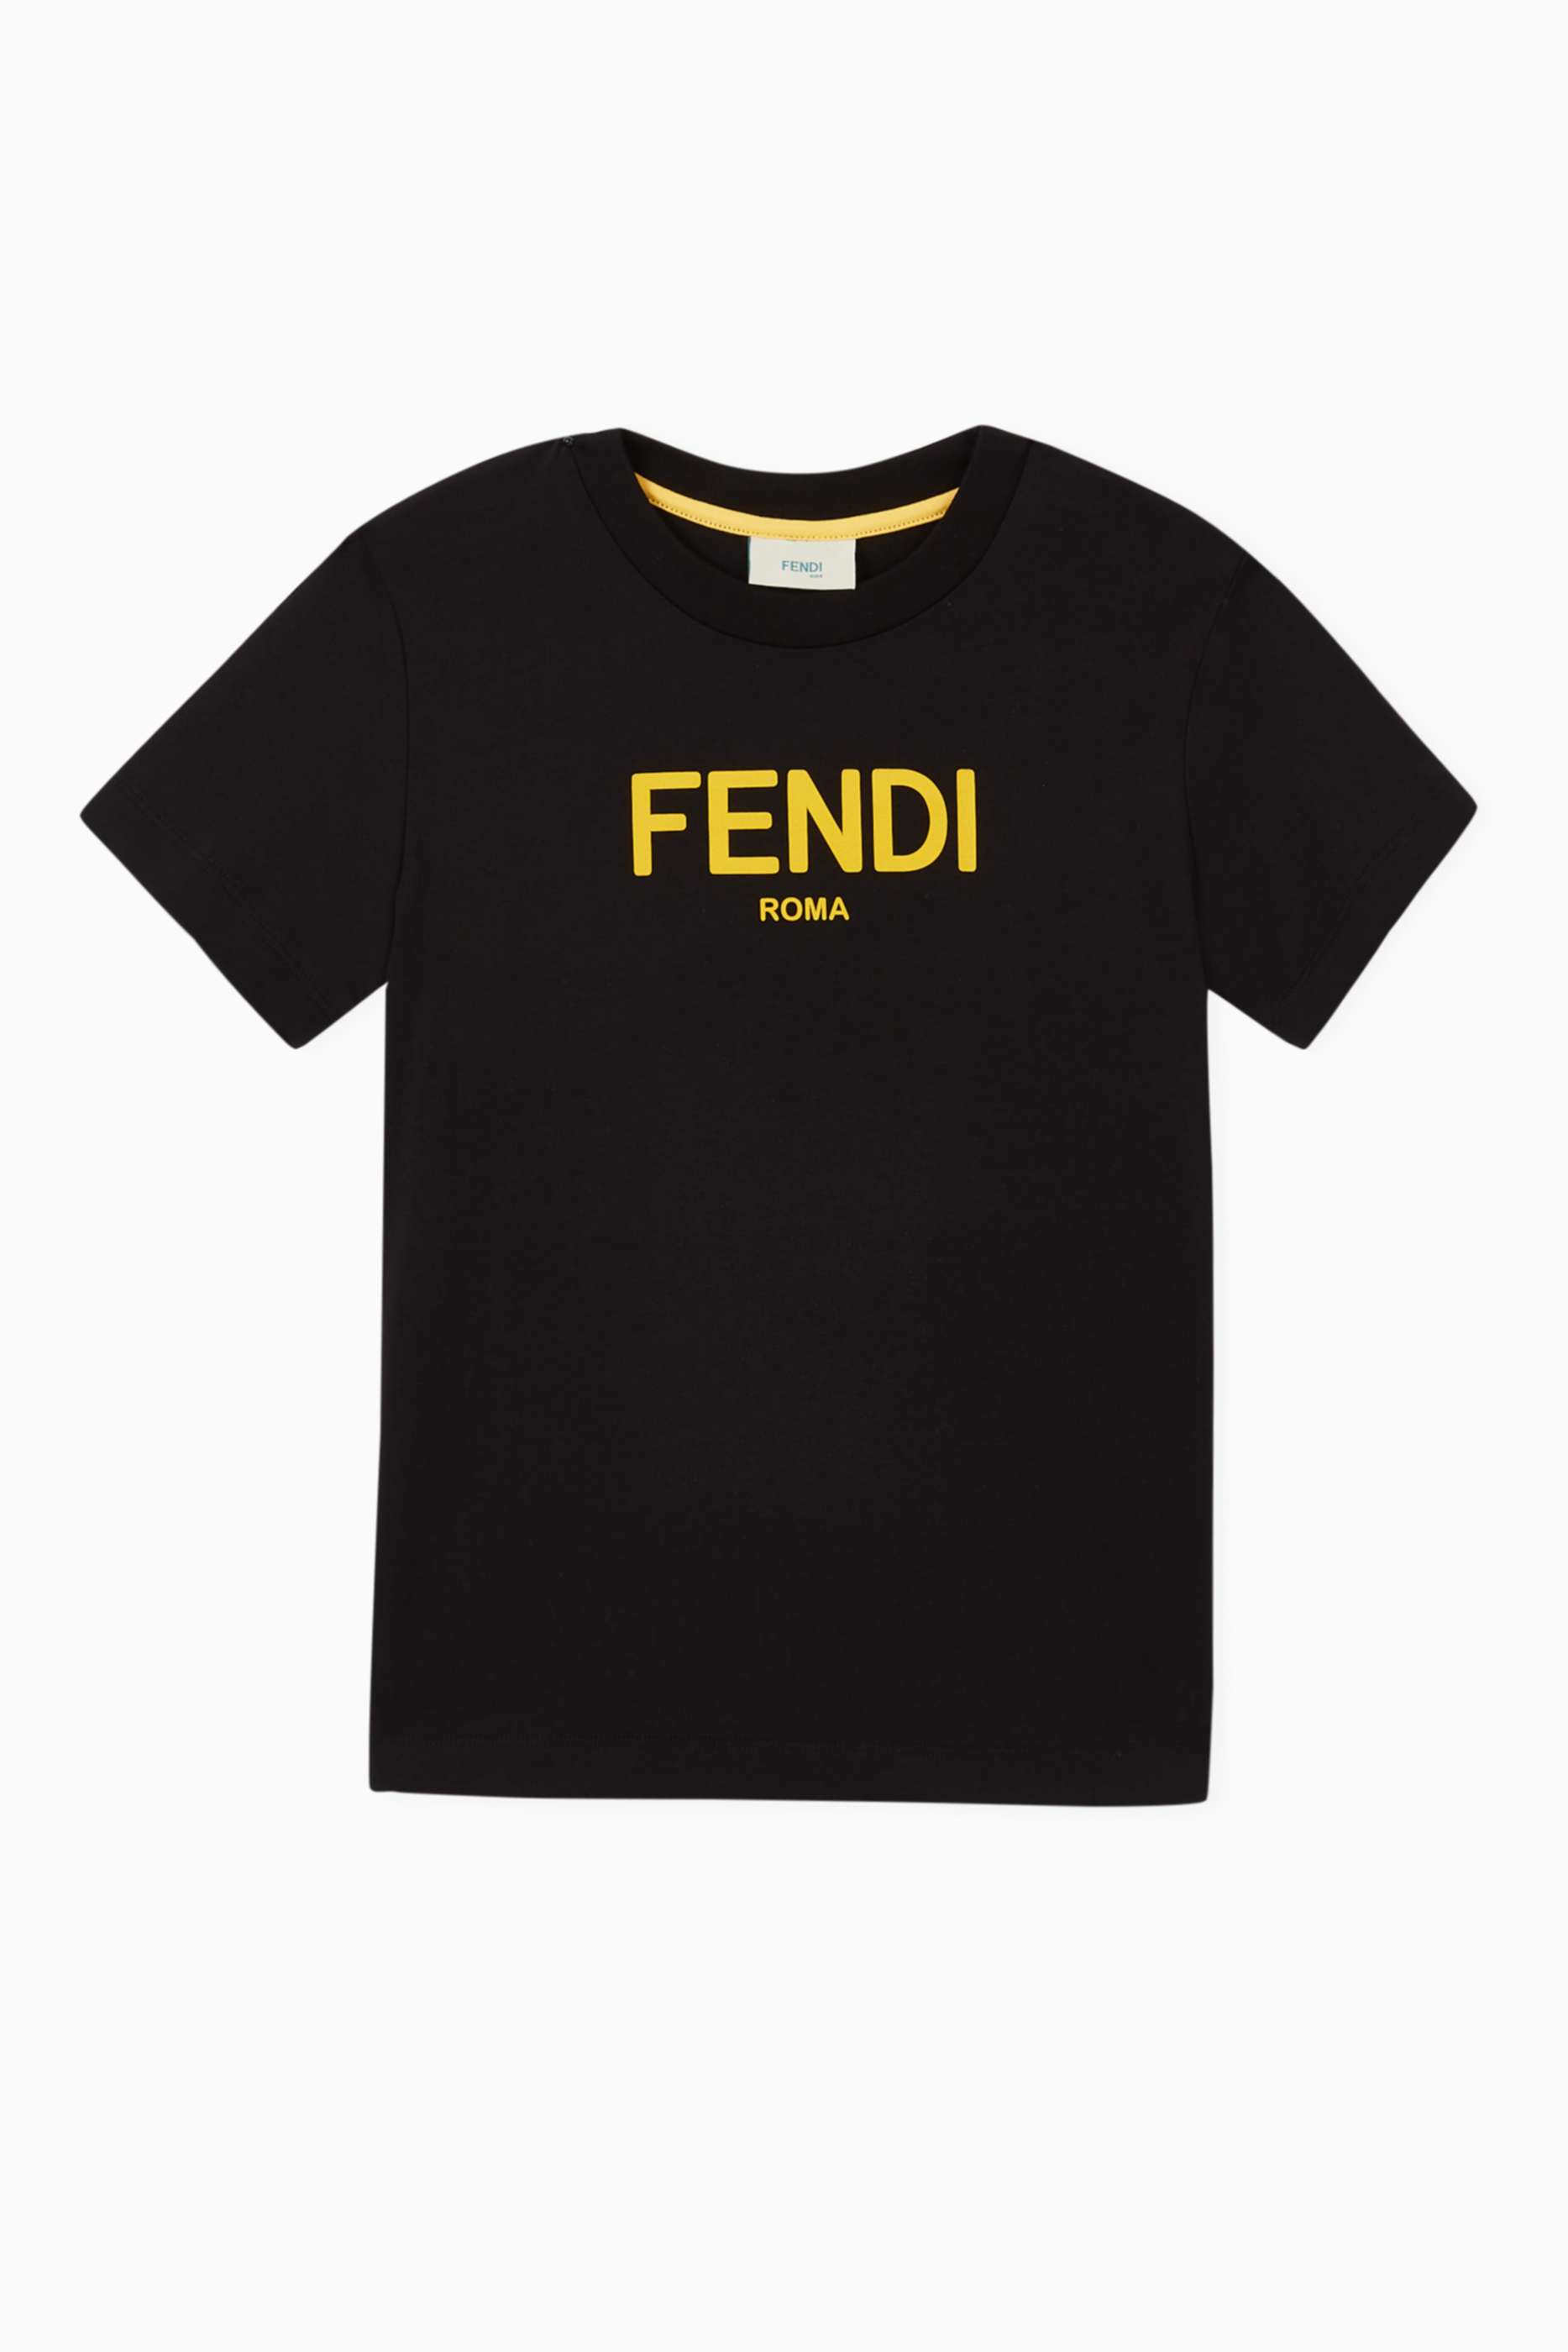 Shop Fendi Black Logo Print Jersey T-Shirt for Kids | Ounass UAE